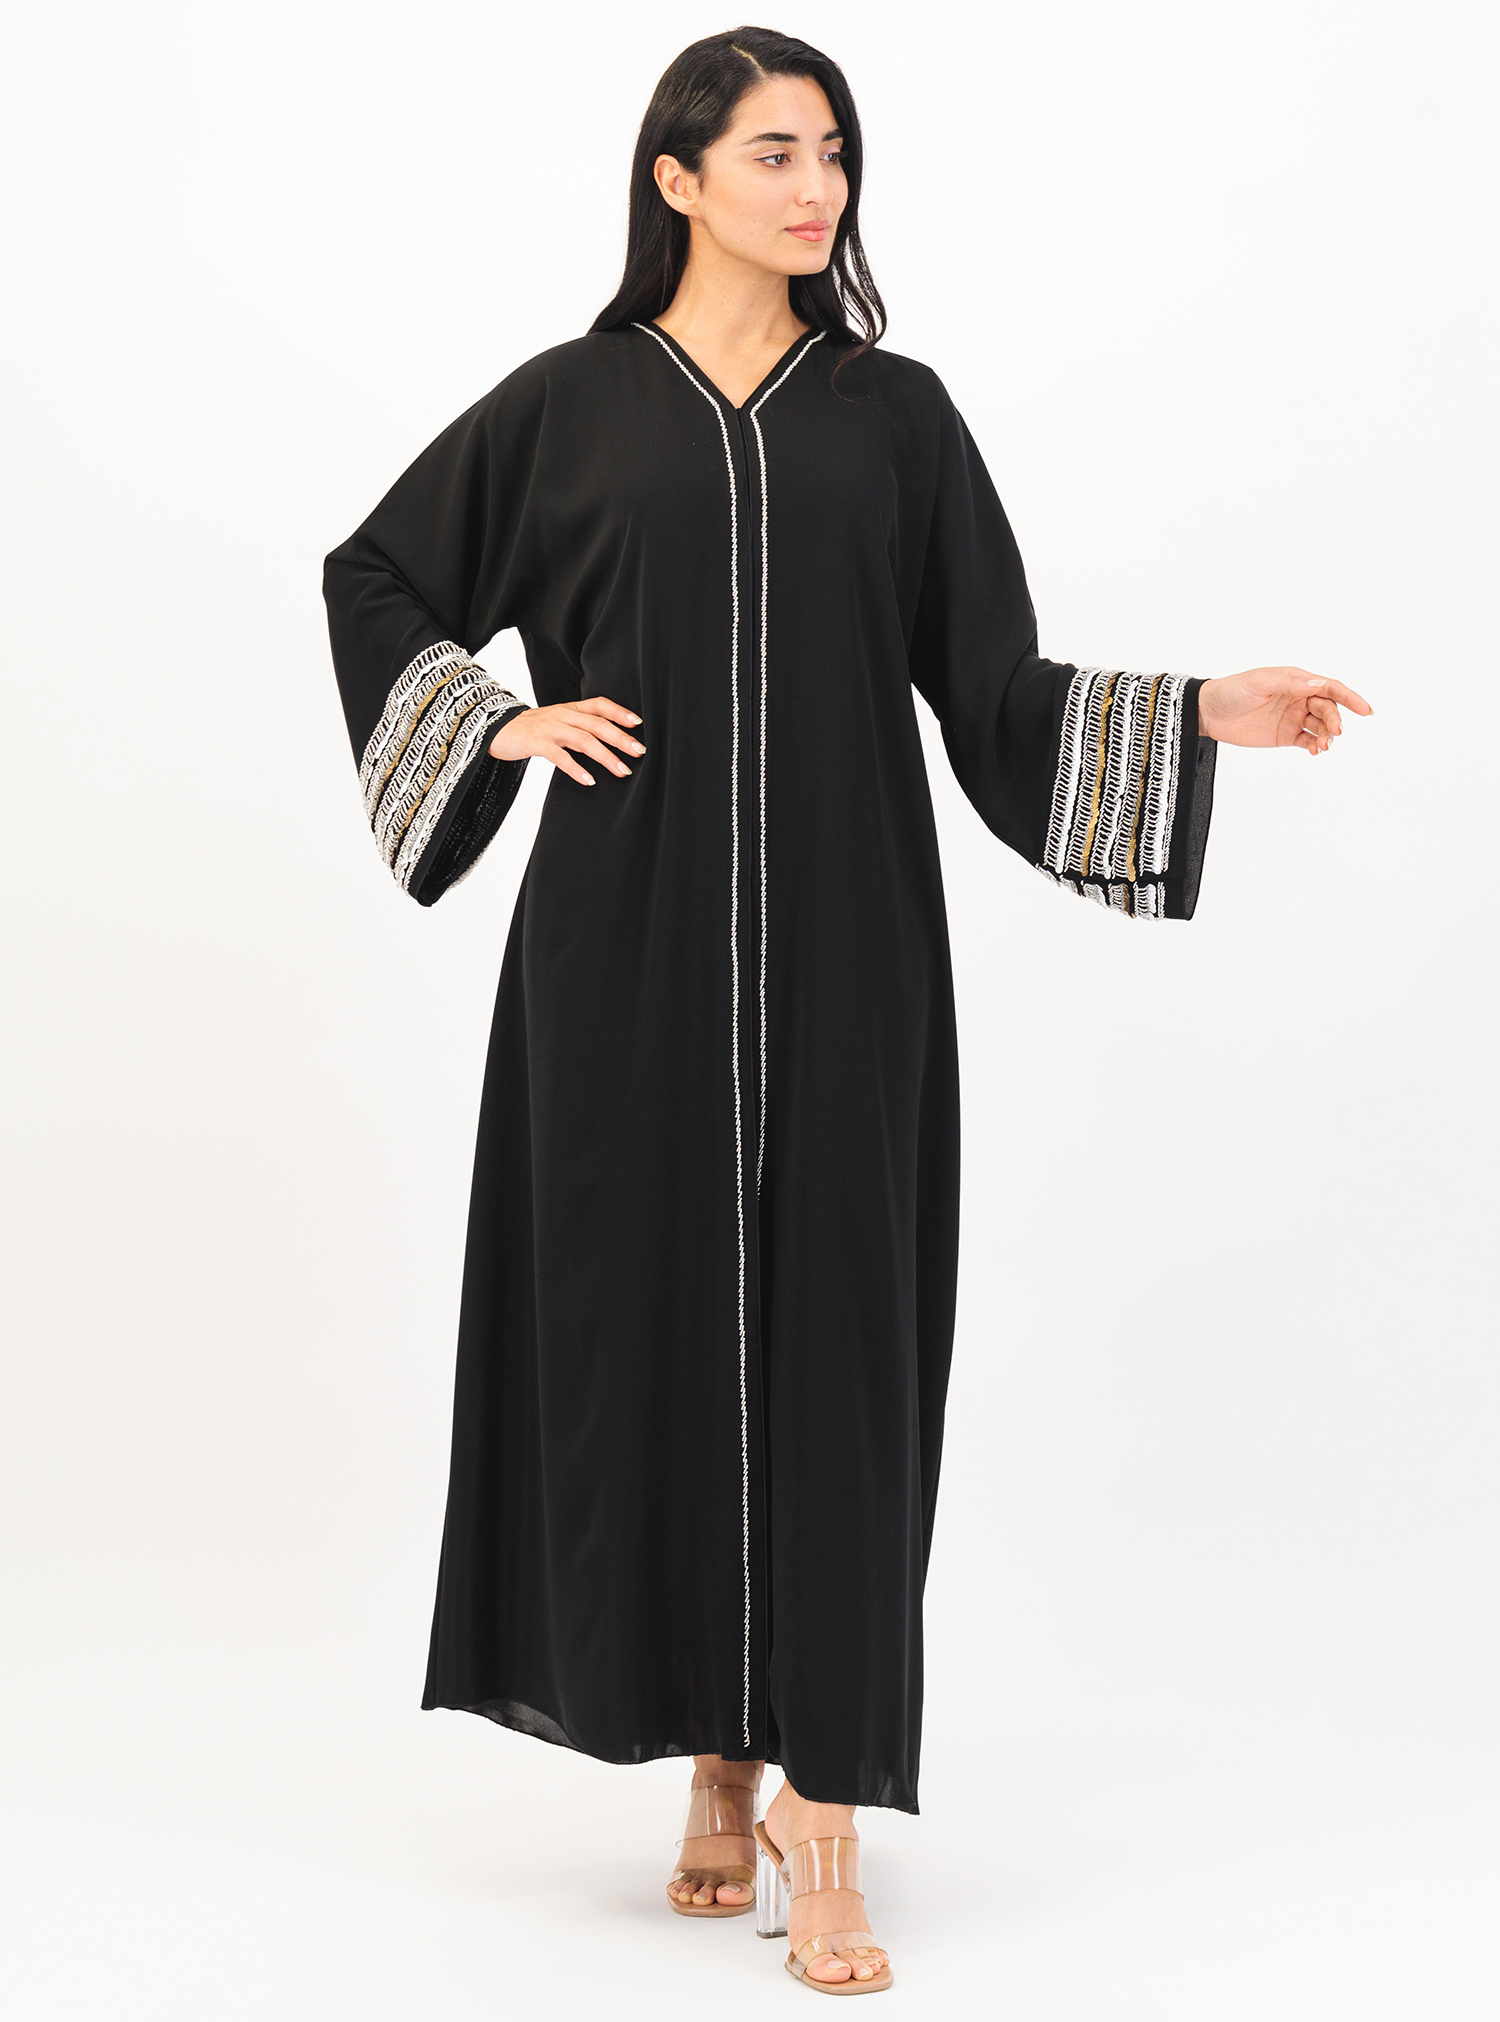 AS 003 Abaya Black Abaya with white and gold sequins embellishment ...